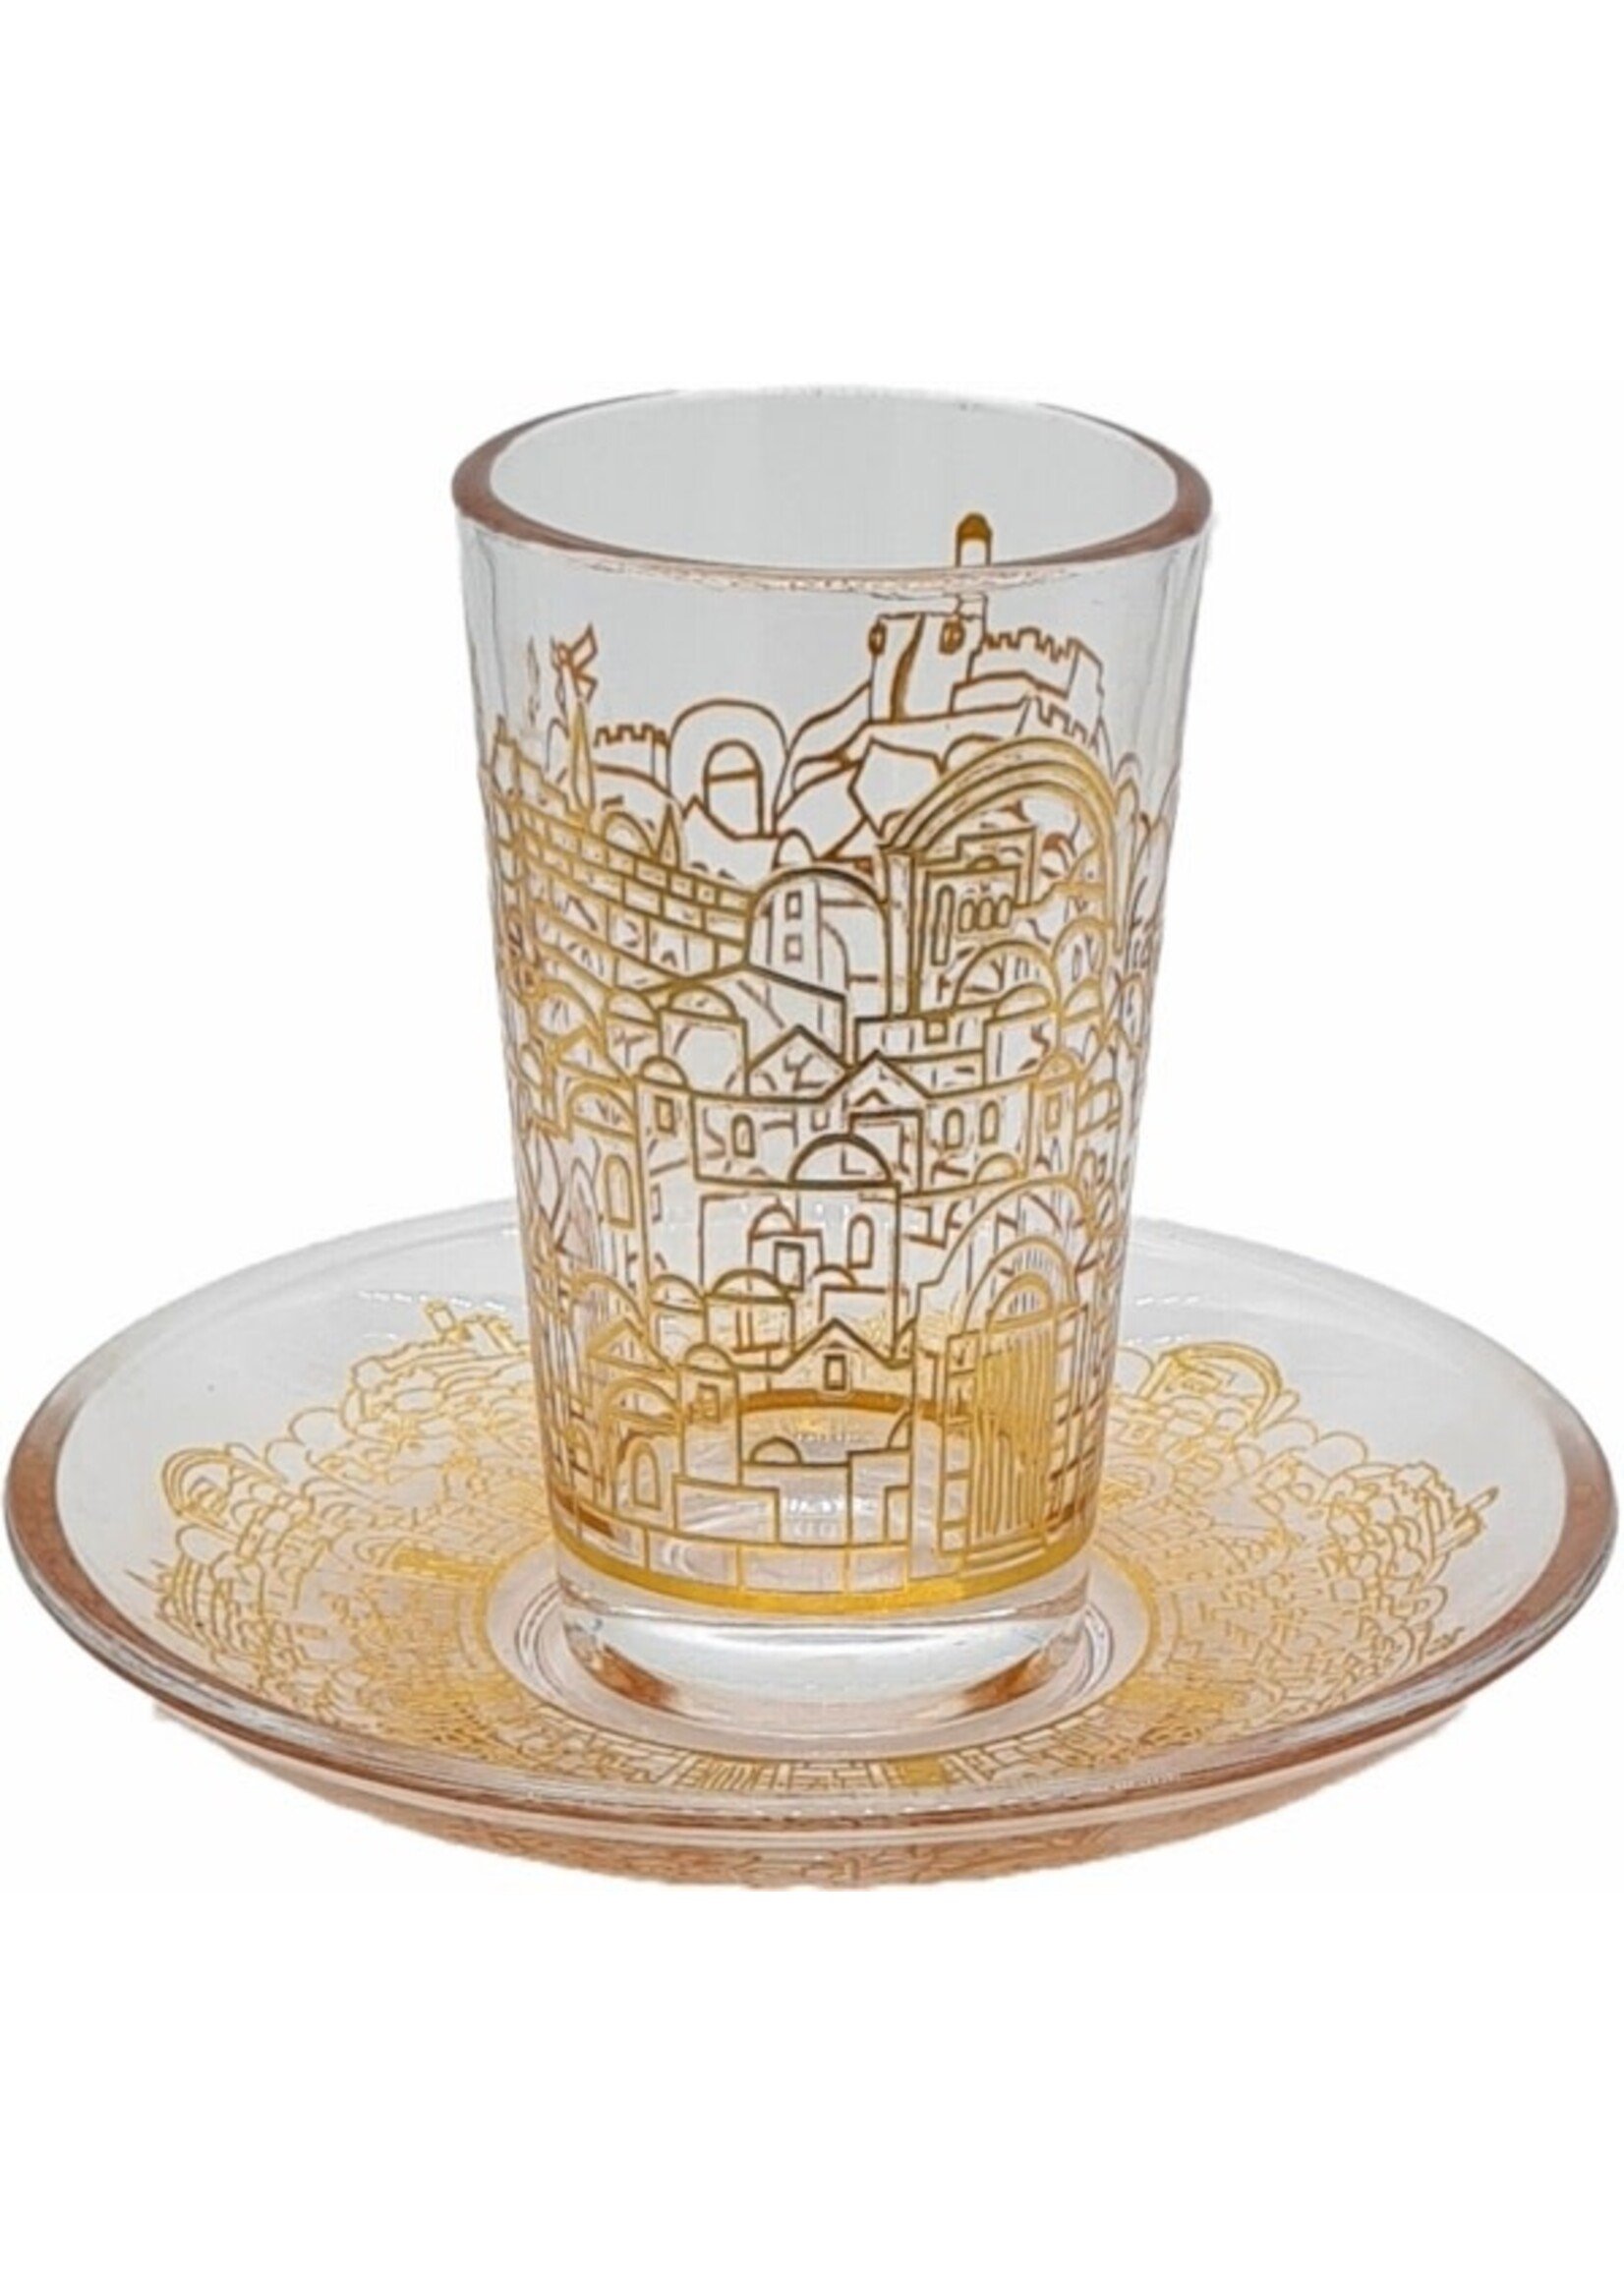 KIDDISH CUP GLASS - JERUSALEM GOLD